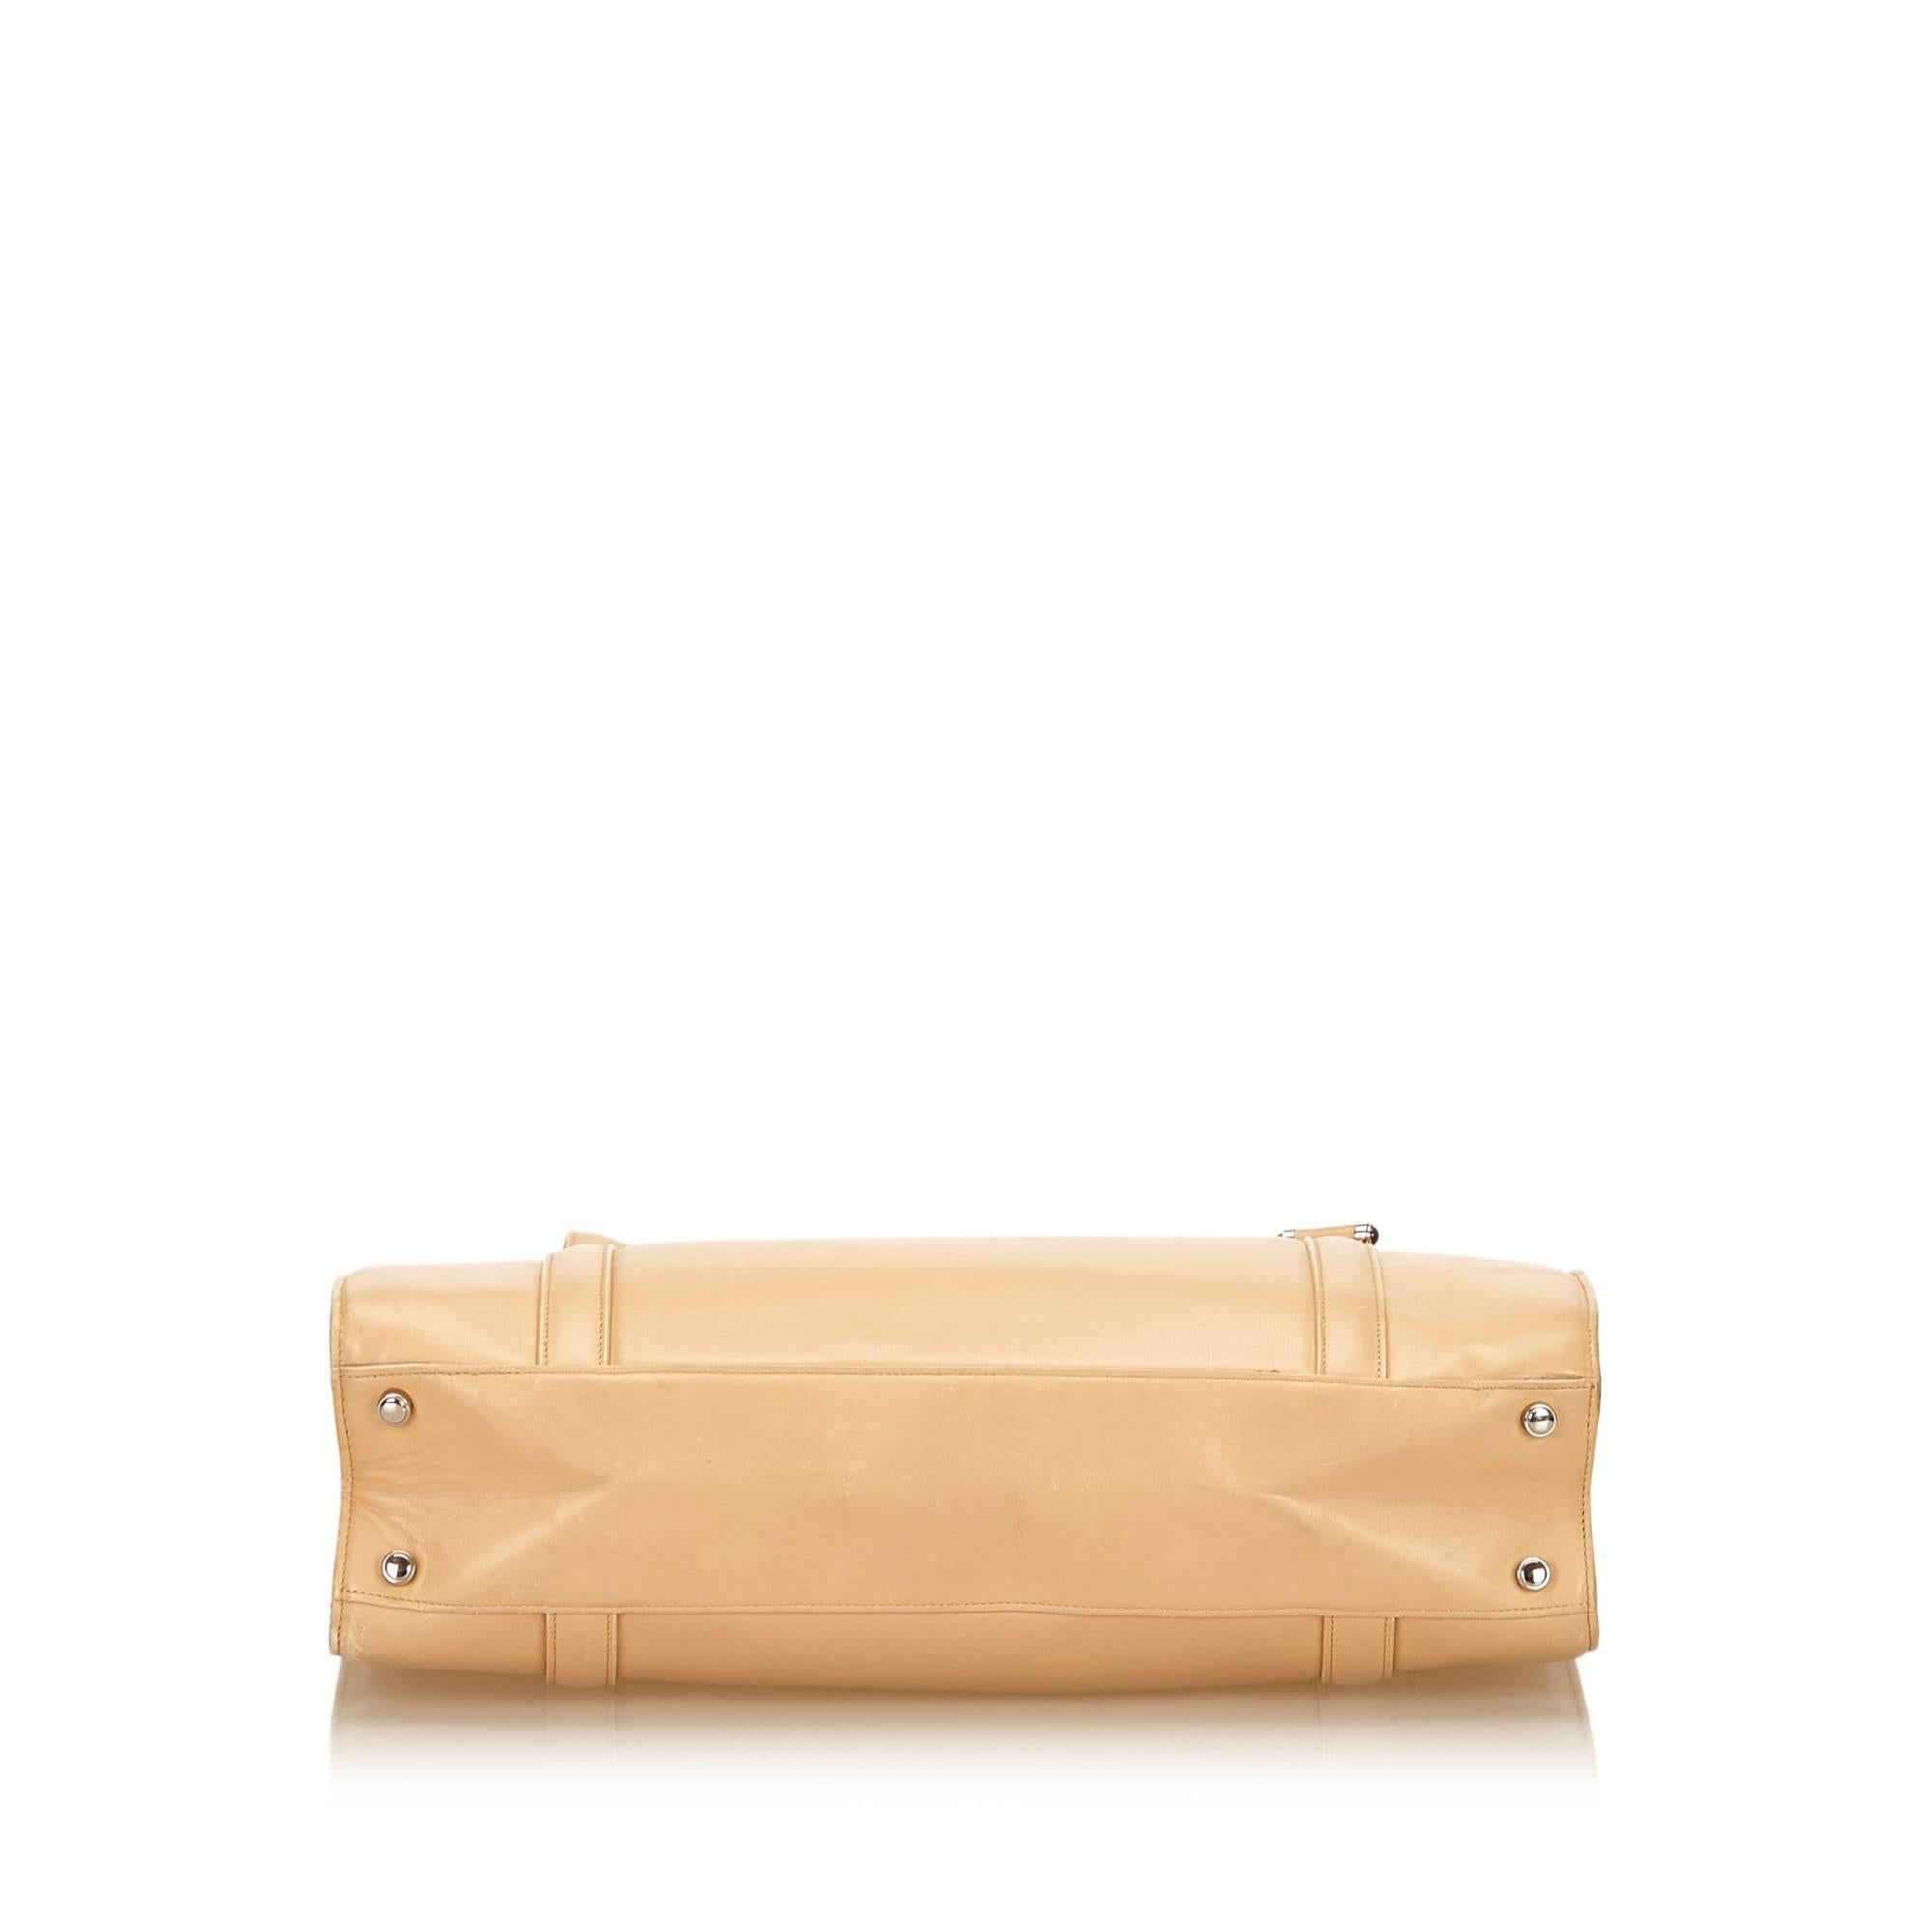 Women's or Men's Cartier Brown Tote Bag